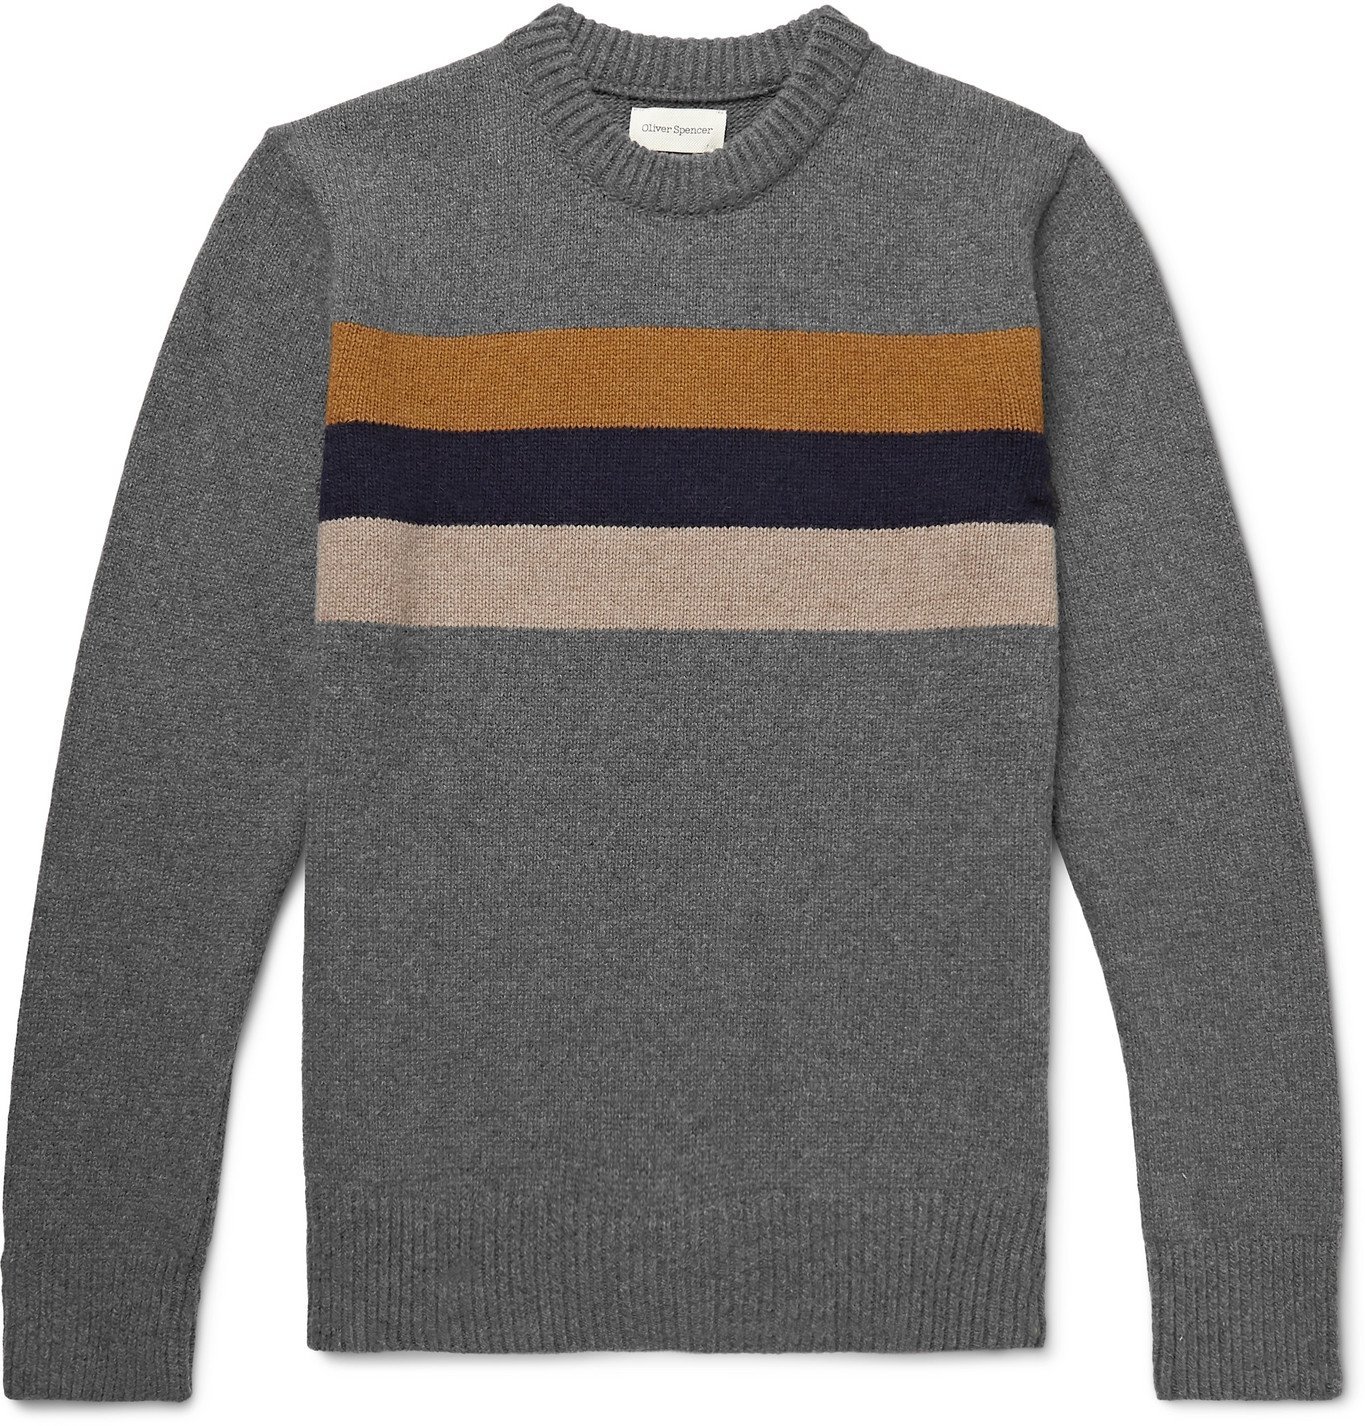 Oliver Spencer - Blenheim Striped Wool Sweater - Gray